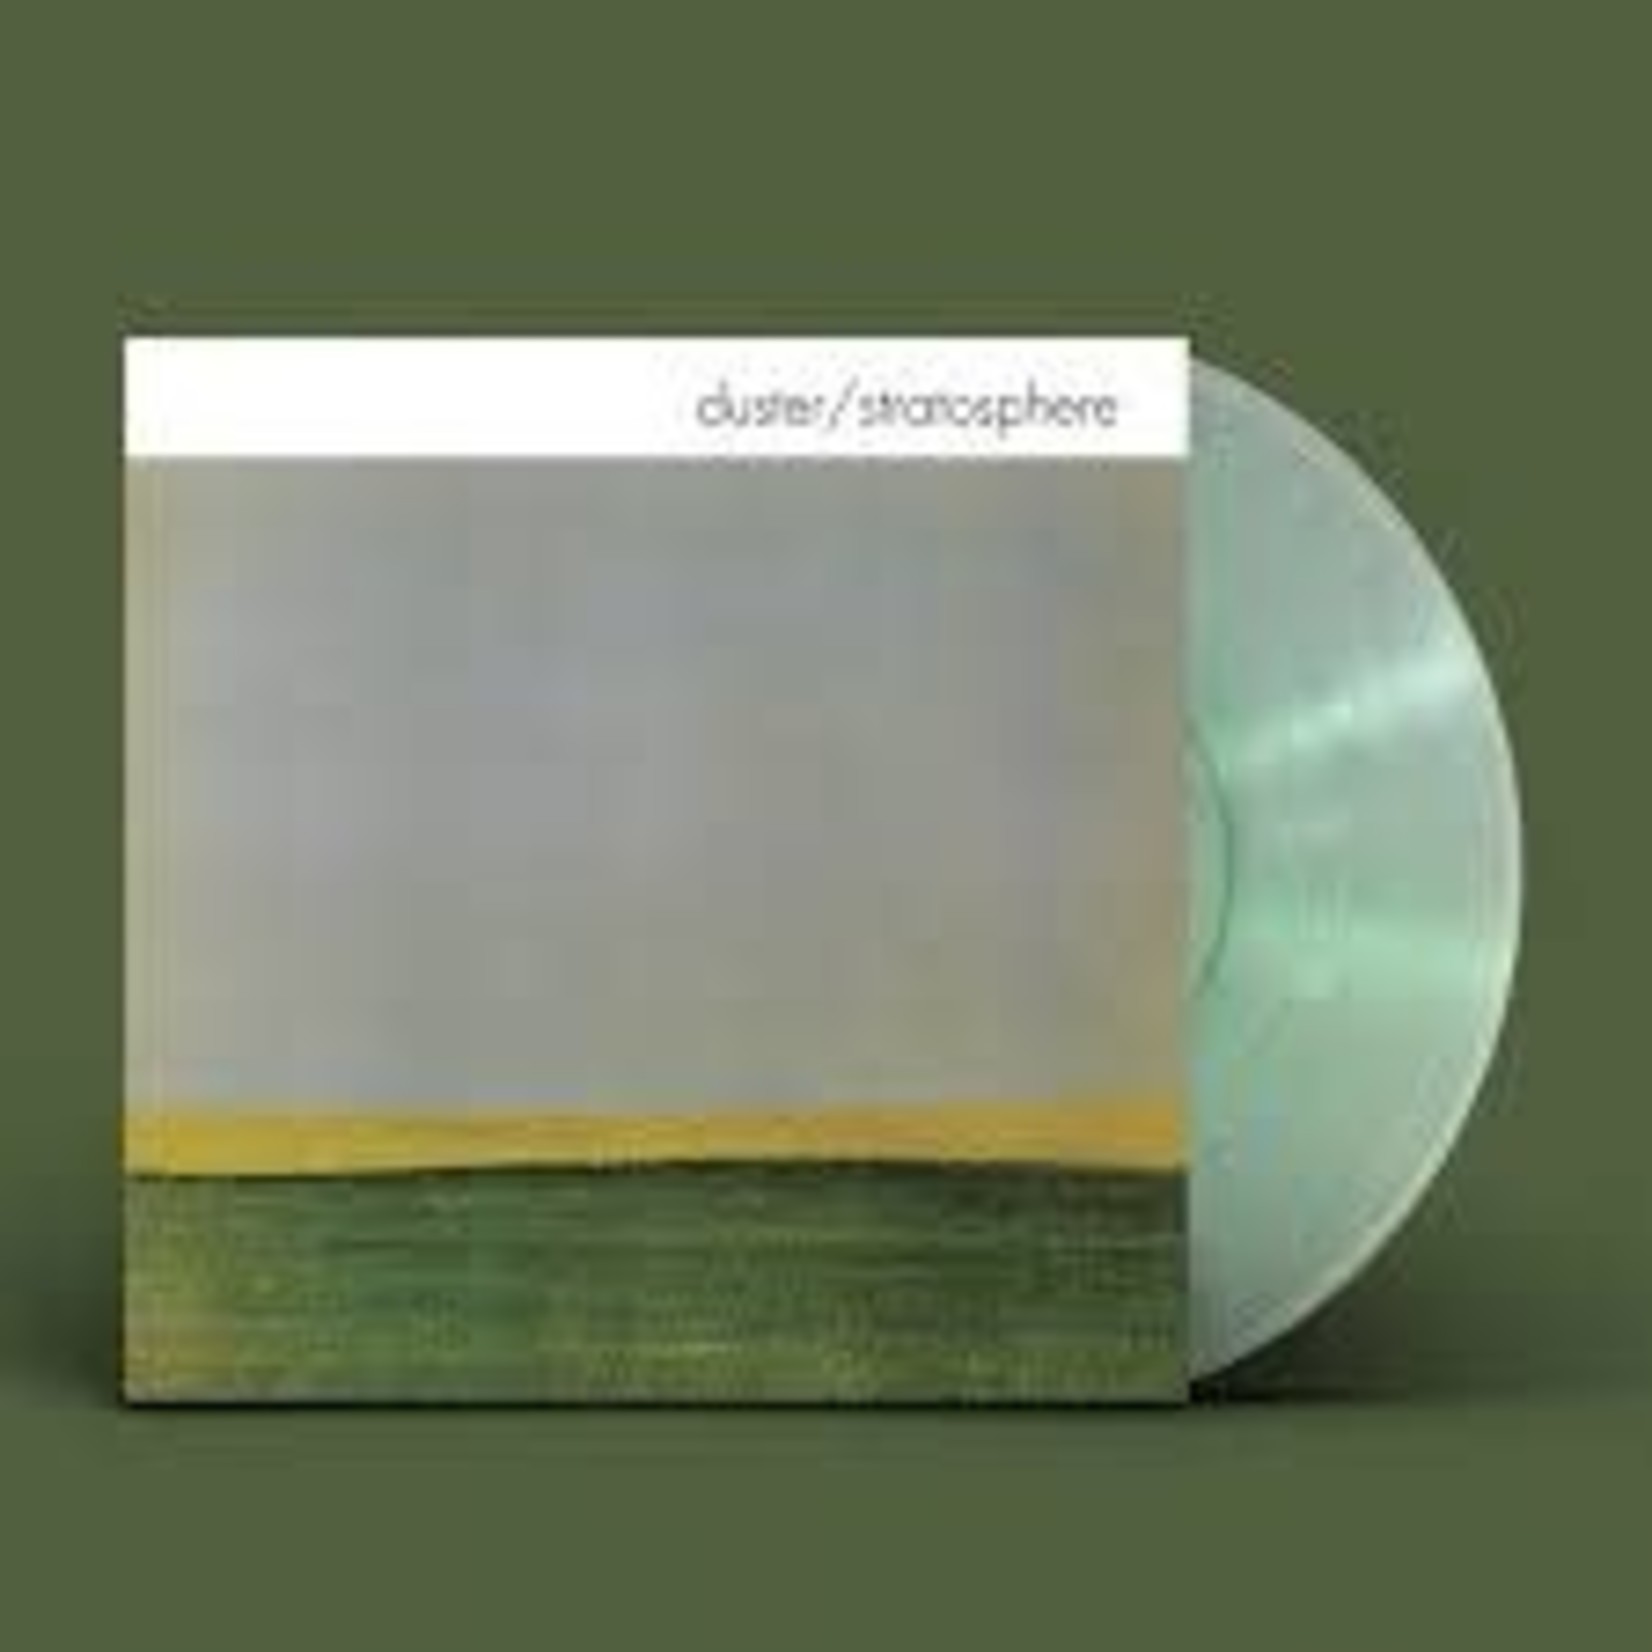 [New] Duster - Stratosphere (gold dust coloured vinyl)